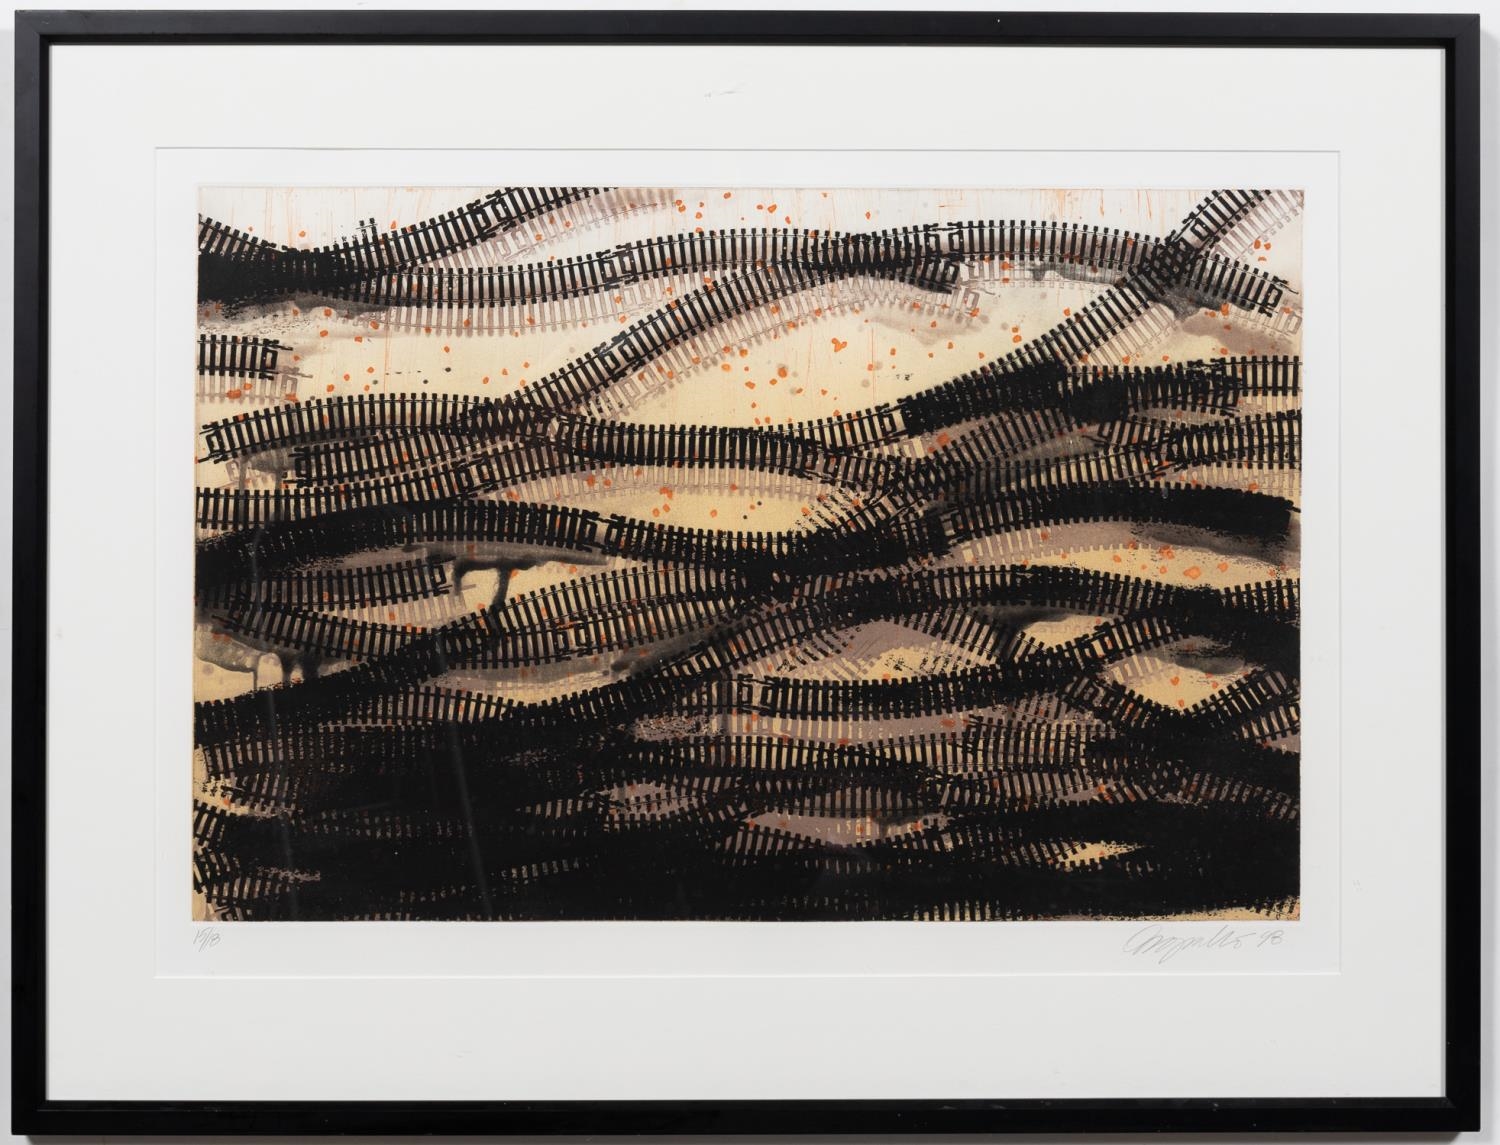 Artwork by Deborah Oropallo, DEBORAH OROPALLO, "RAILING" ETCHING, 1998, Made of ETCHING, 1998, Deborah Oropallo (American, b  1954   )  "Railing"  1998, etching on paper